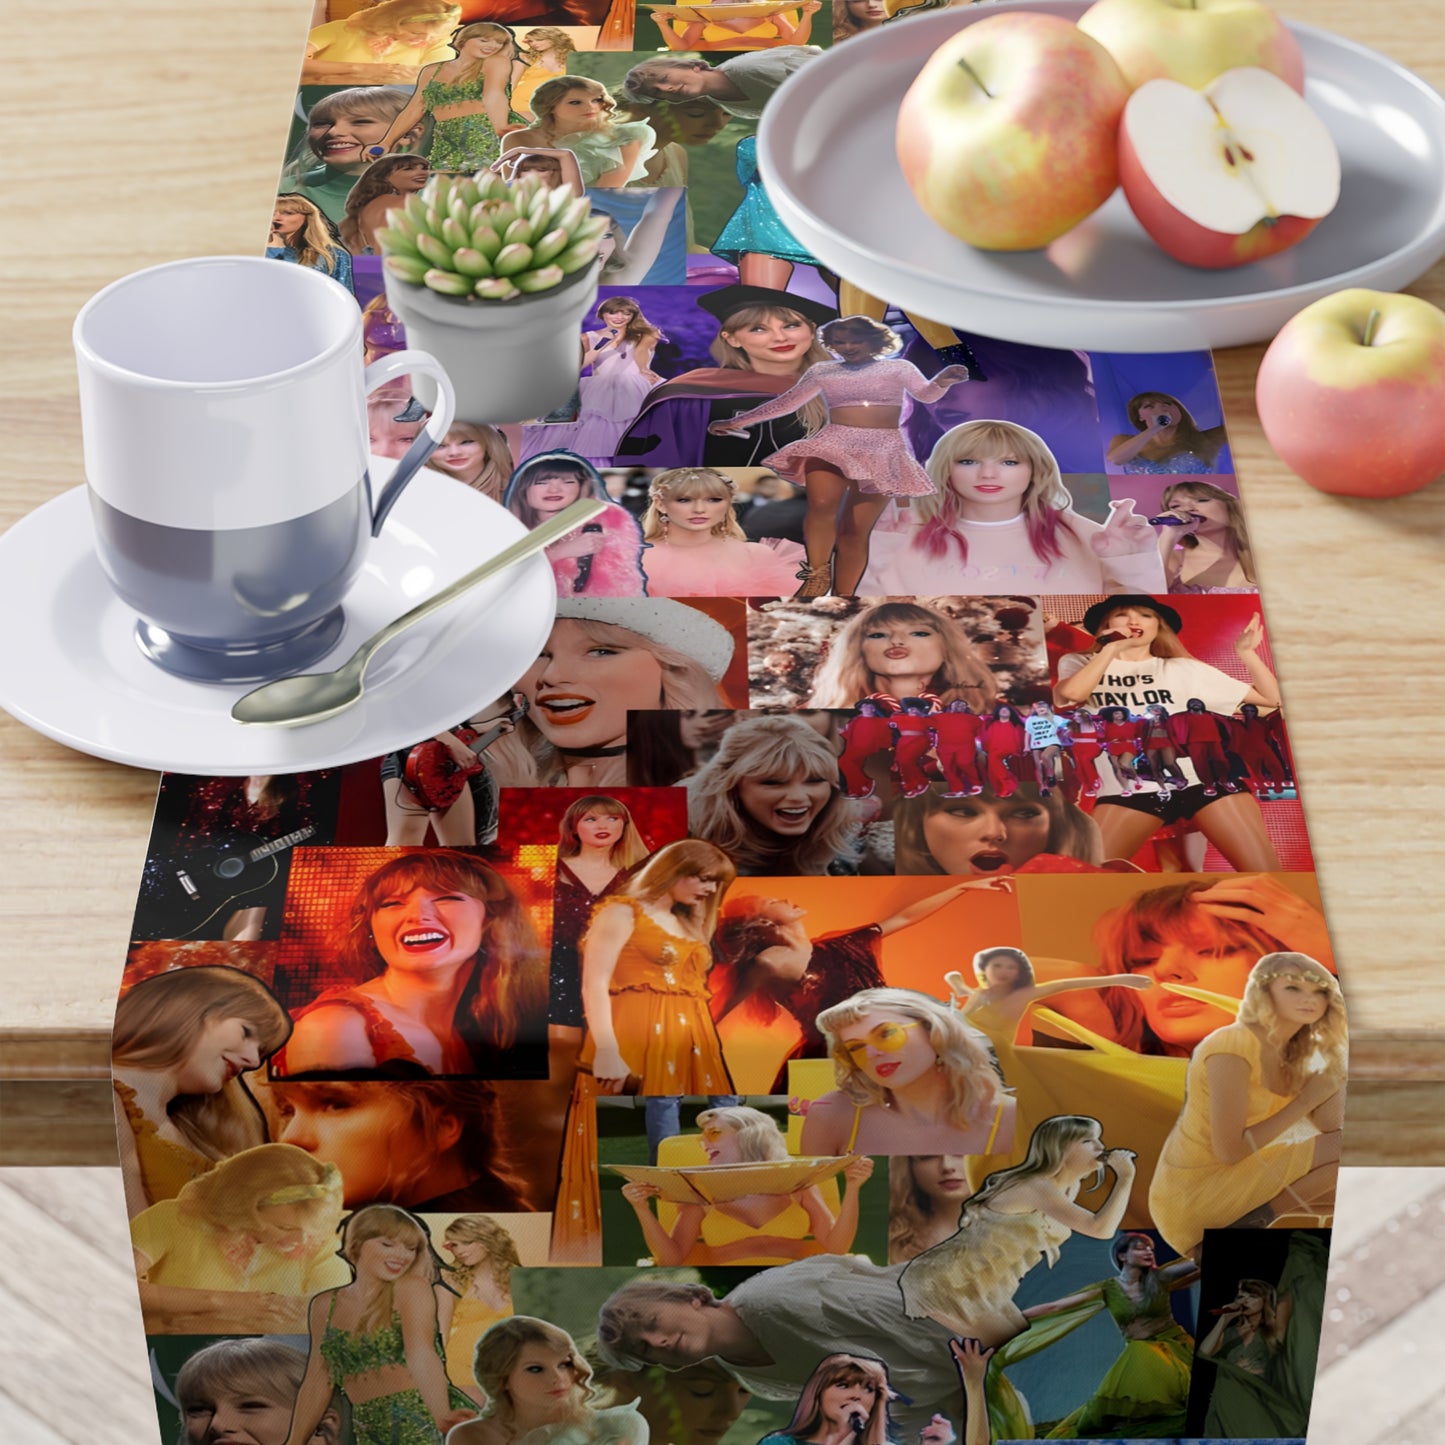 Taylor Swift Rainbow Photo Collage Table Runner